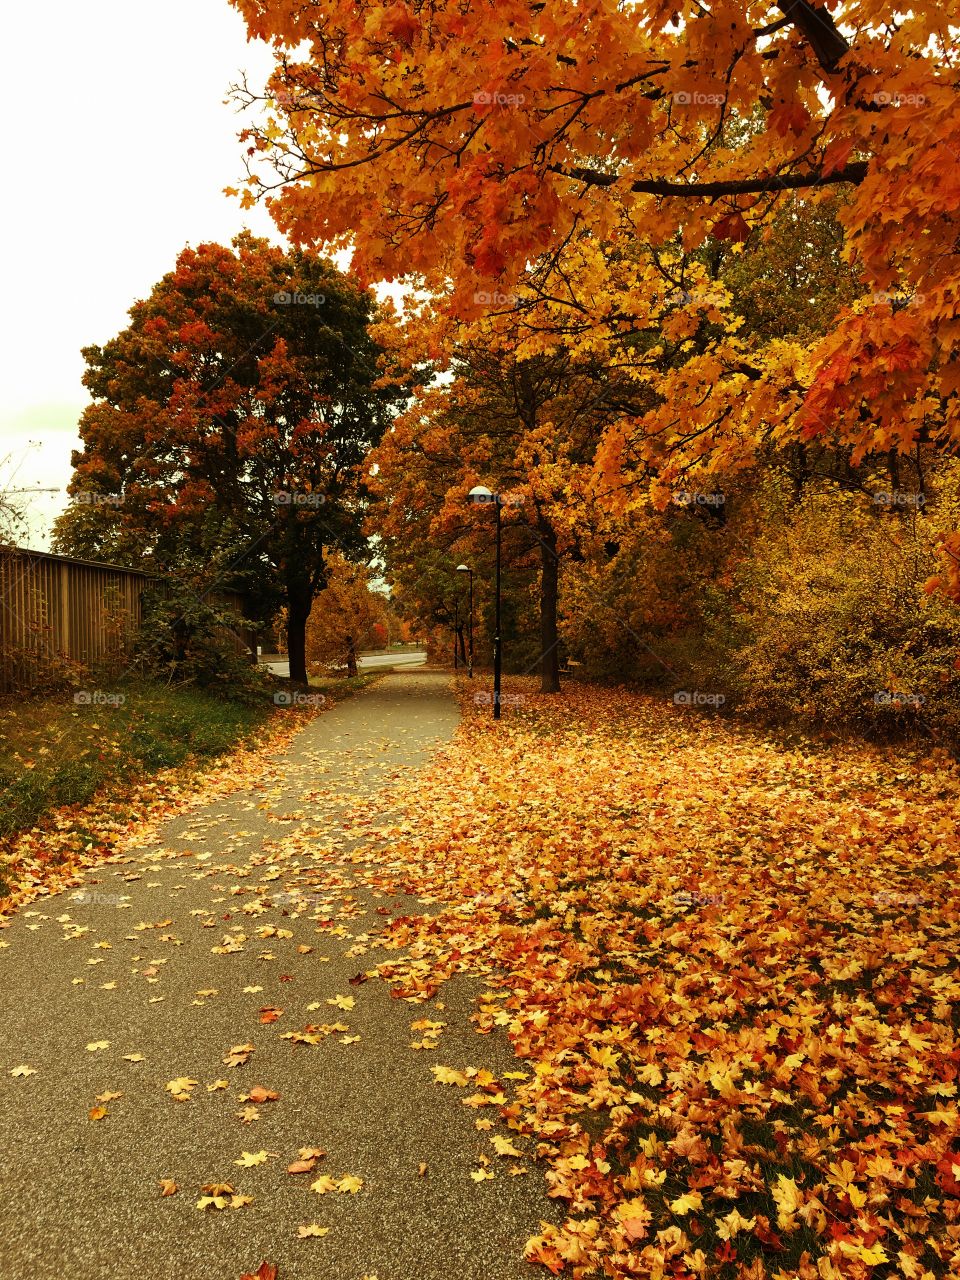 Colored autumn tree
